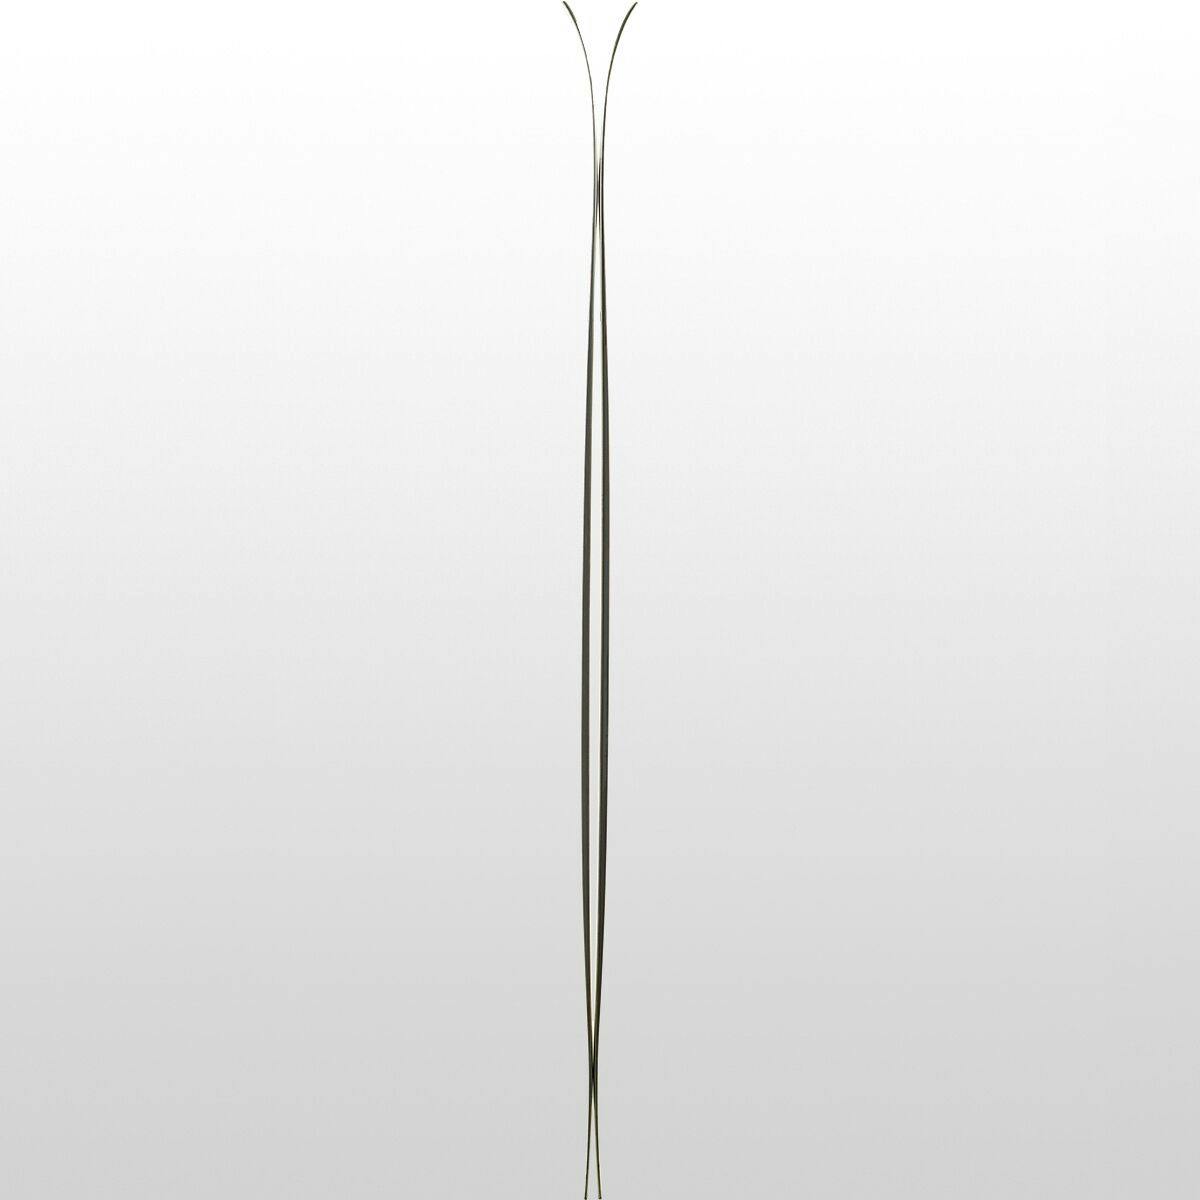 Salomon Stance 96 Skis · 2022 · 176 cm